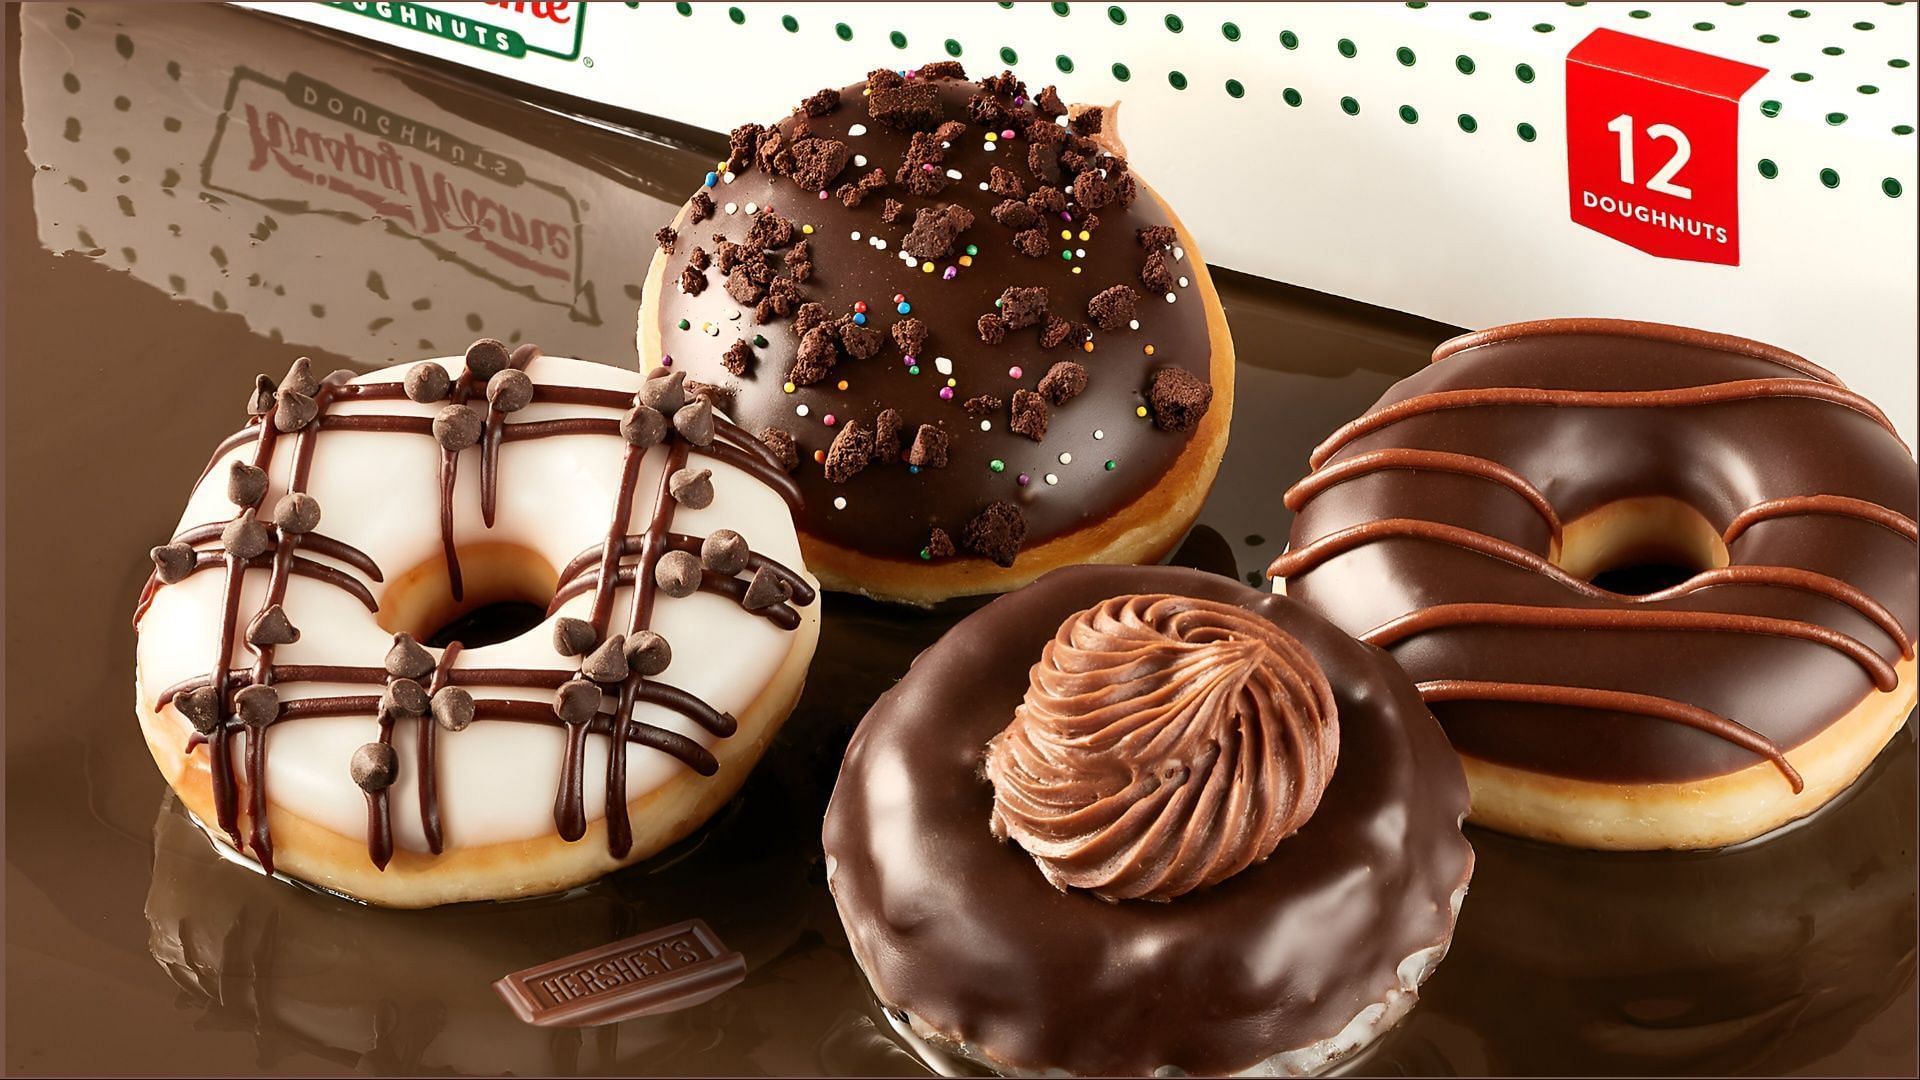 Krispy Kreme unveils new Chocomania doughnut collection (Image via Krispy Kreme)